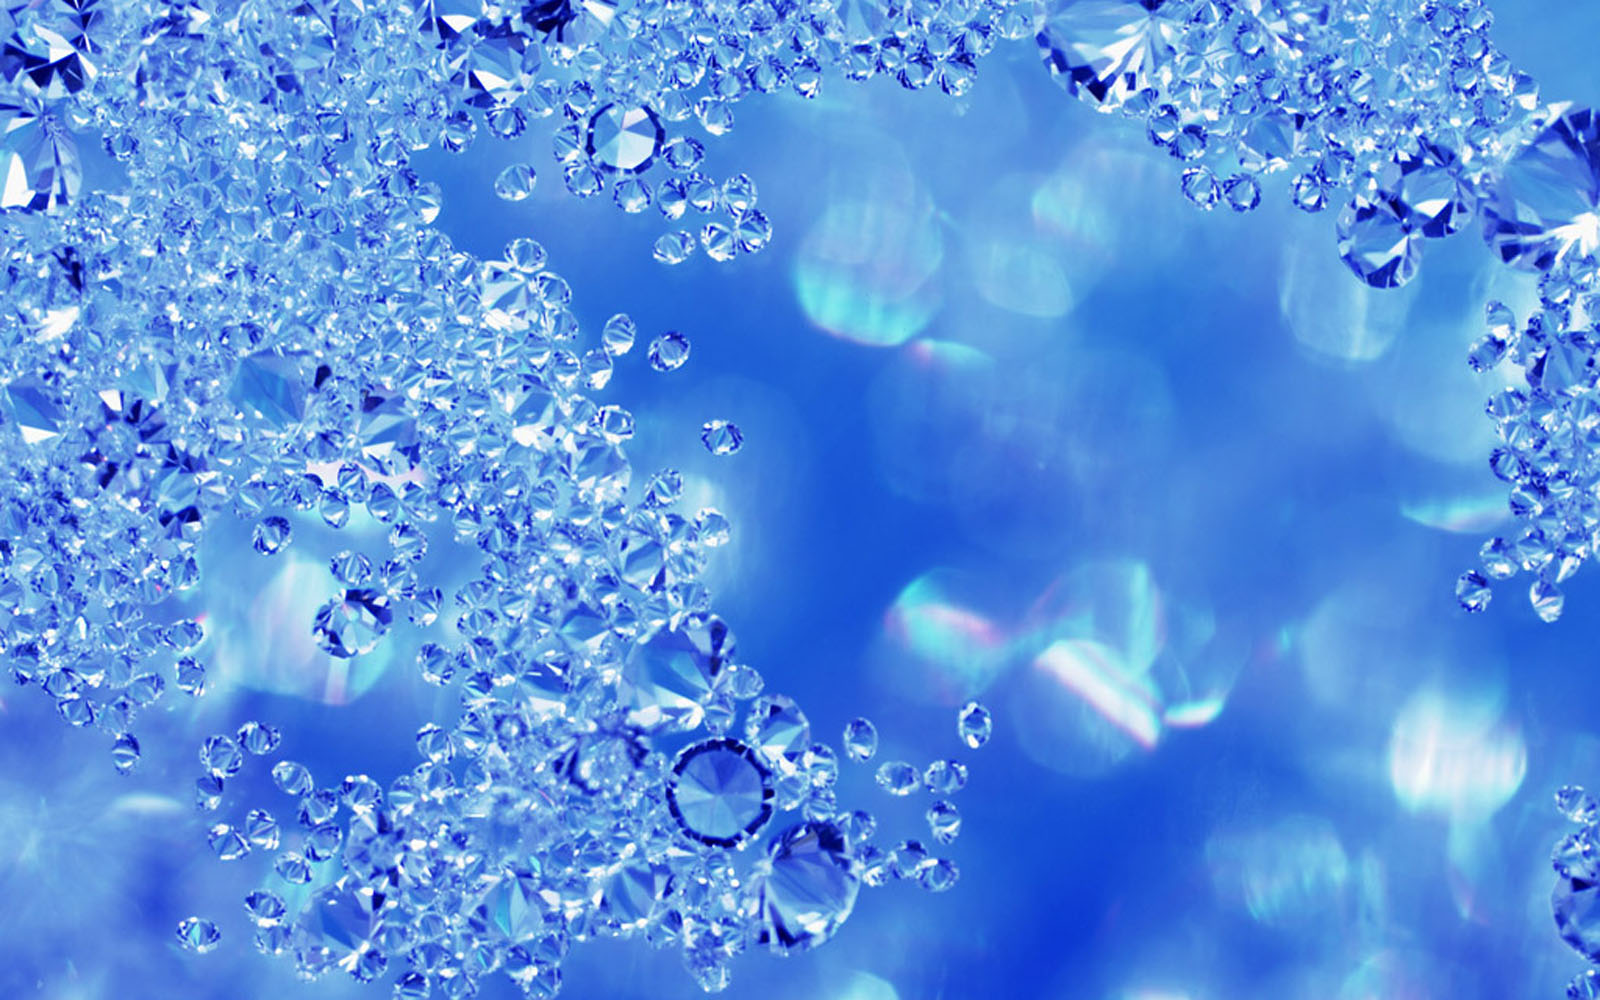 kristal indah gambar kristal terbaru kristal biru gambar kristal keren